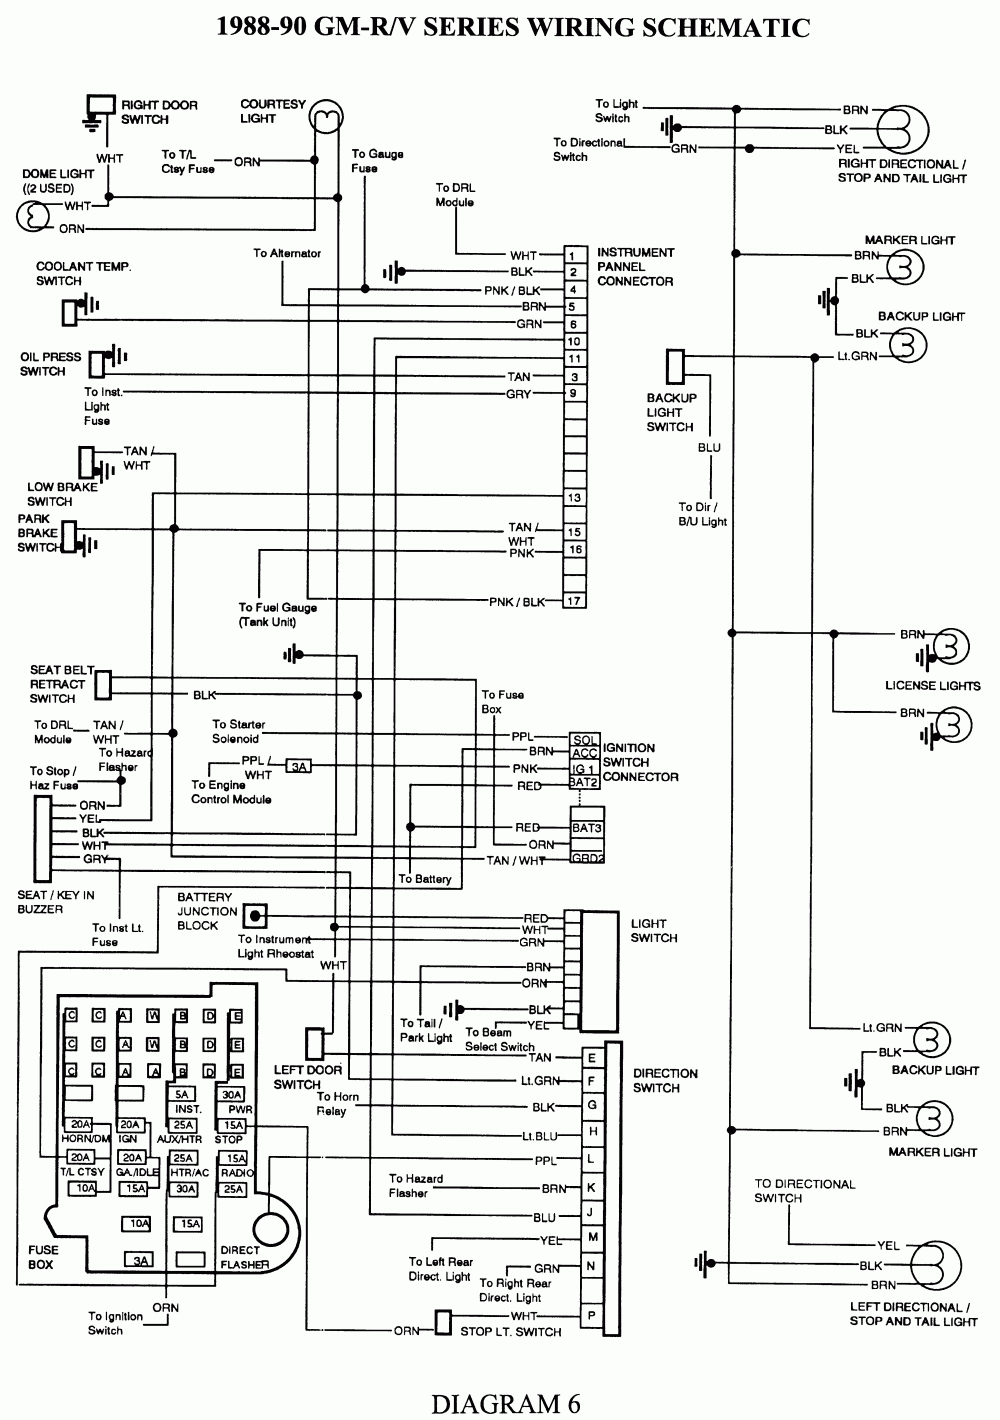 Diagram 1982 Gm Steering Ignition Wiring Diagram Full Version Hd Quality Wiring Diagram Cometdiagram Digitalight It